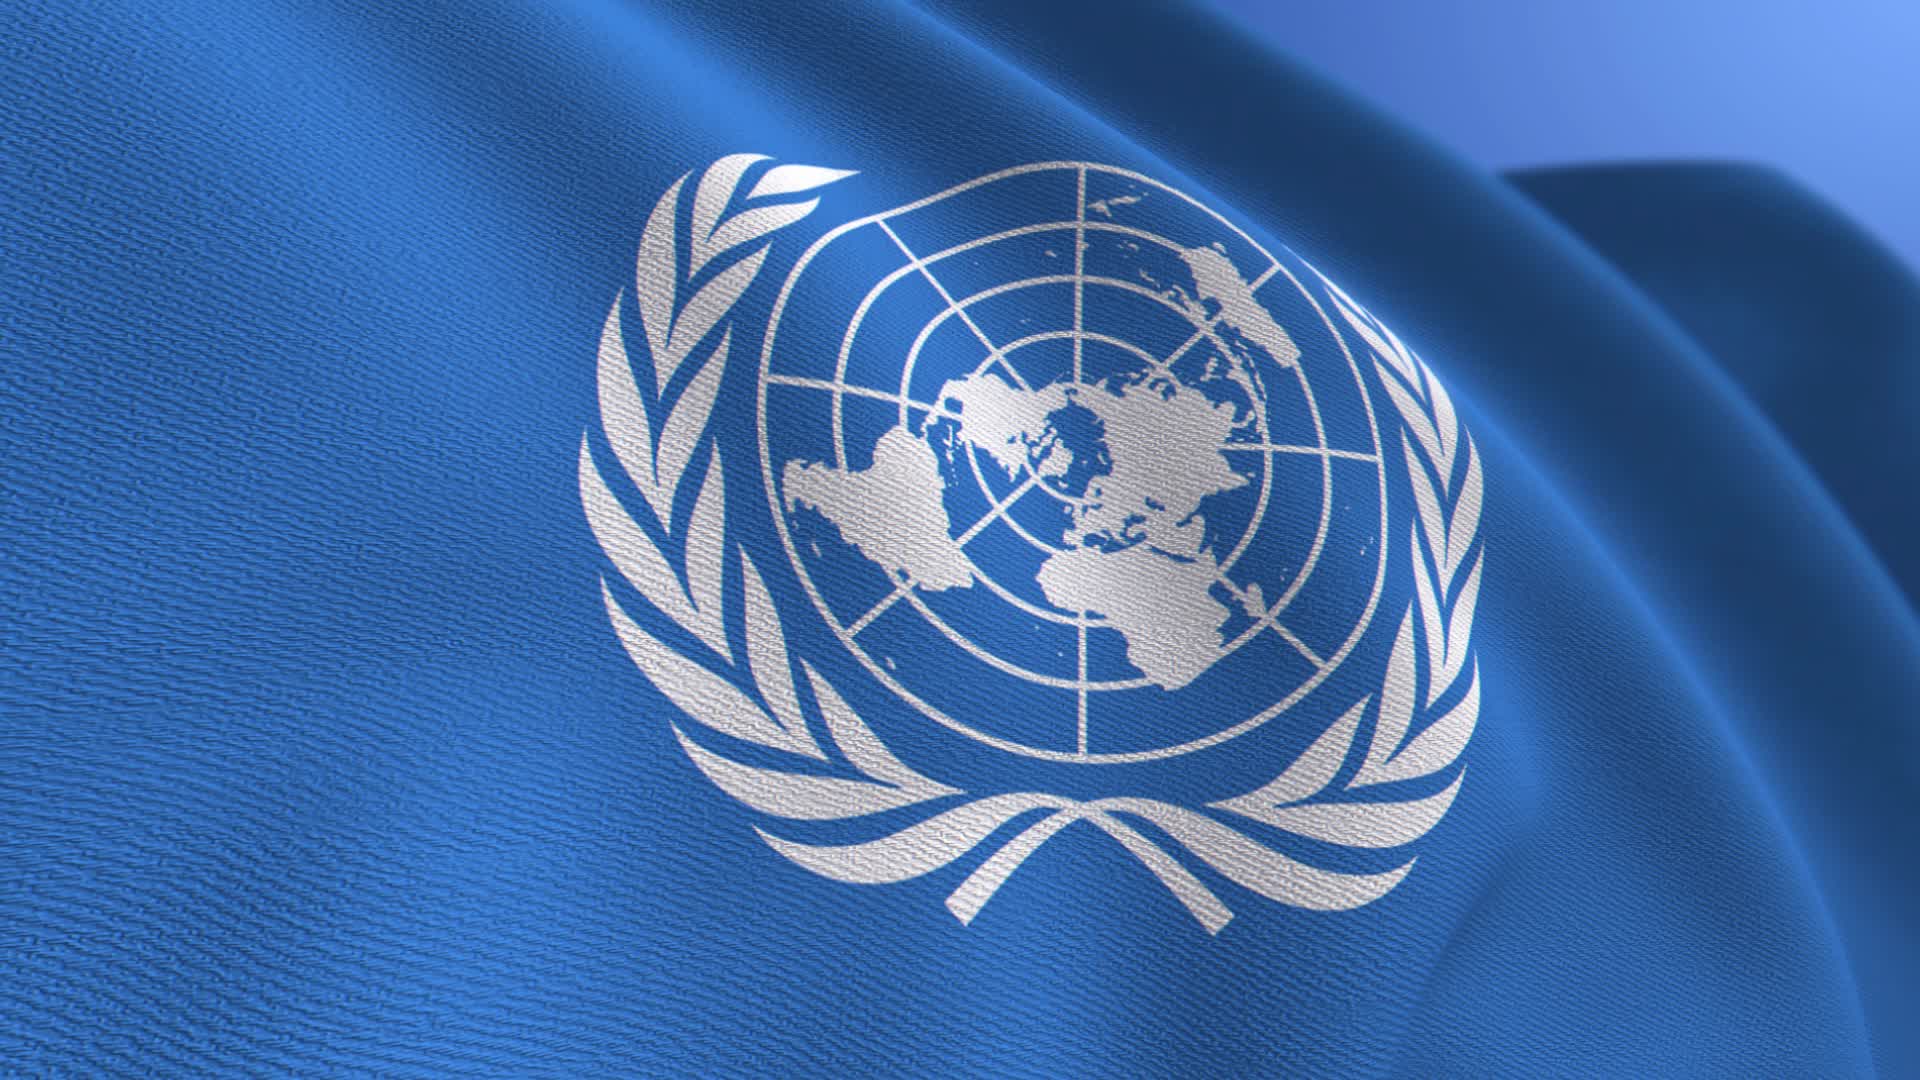 united nations flag